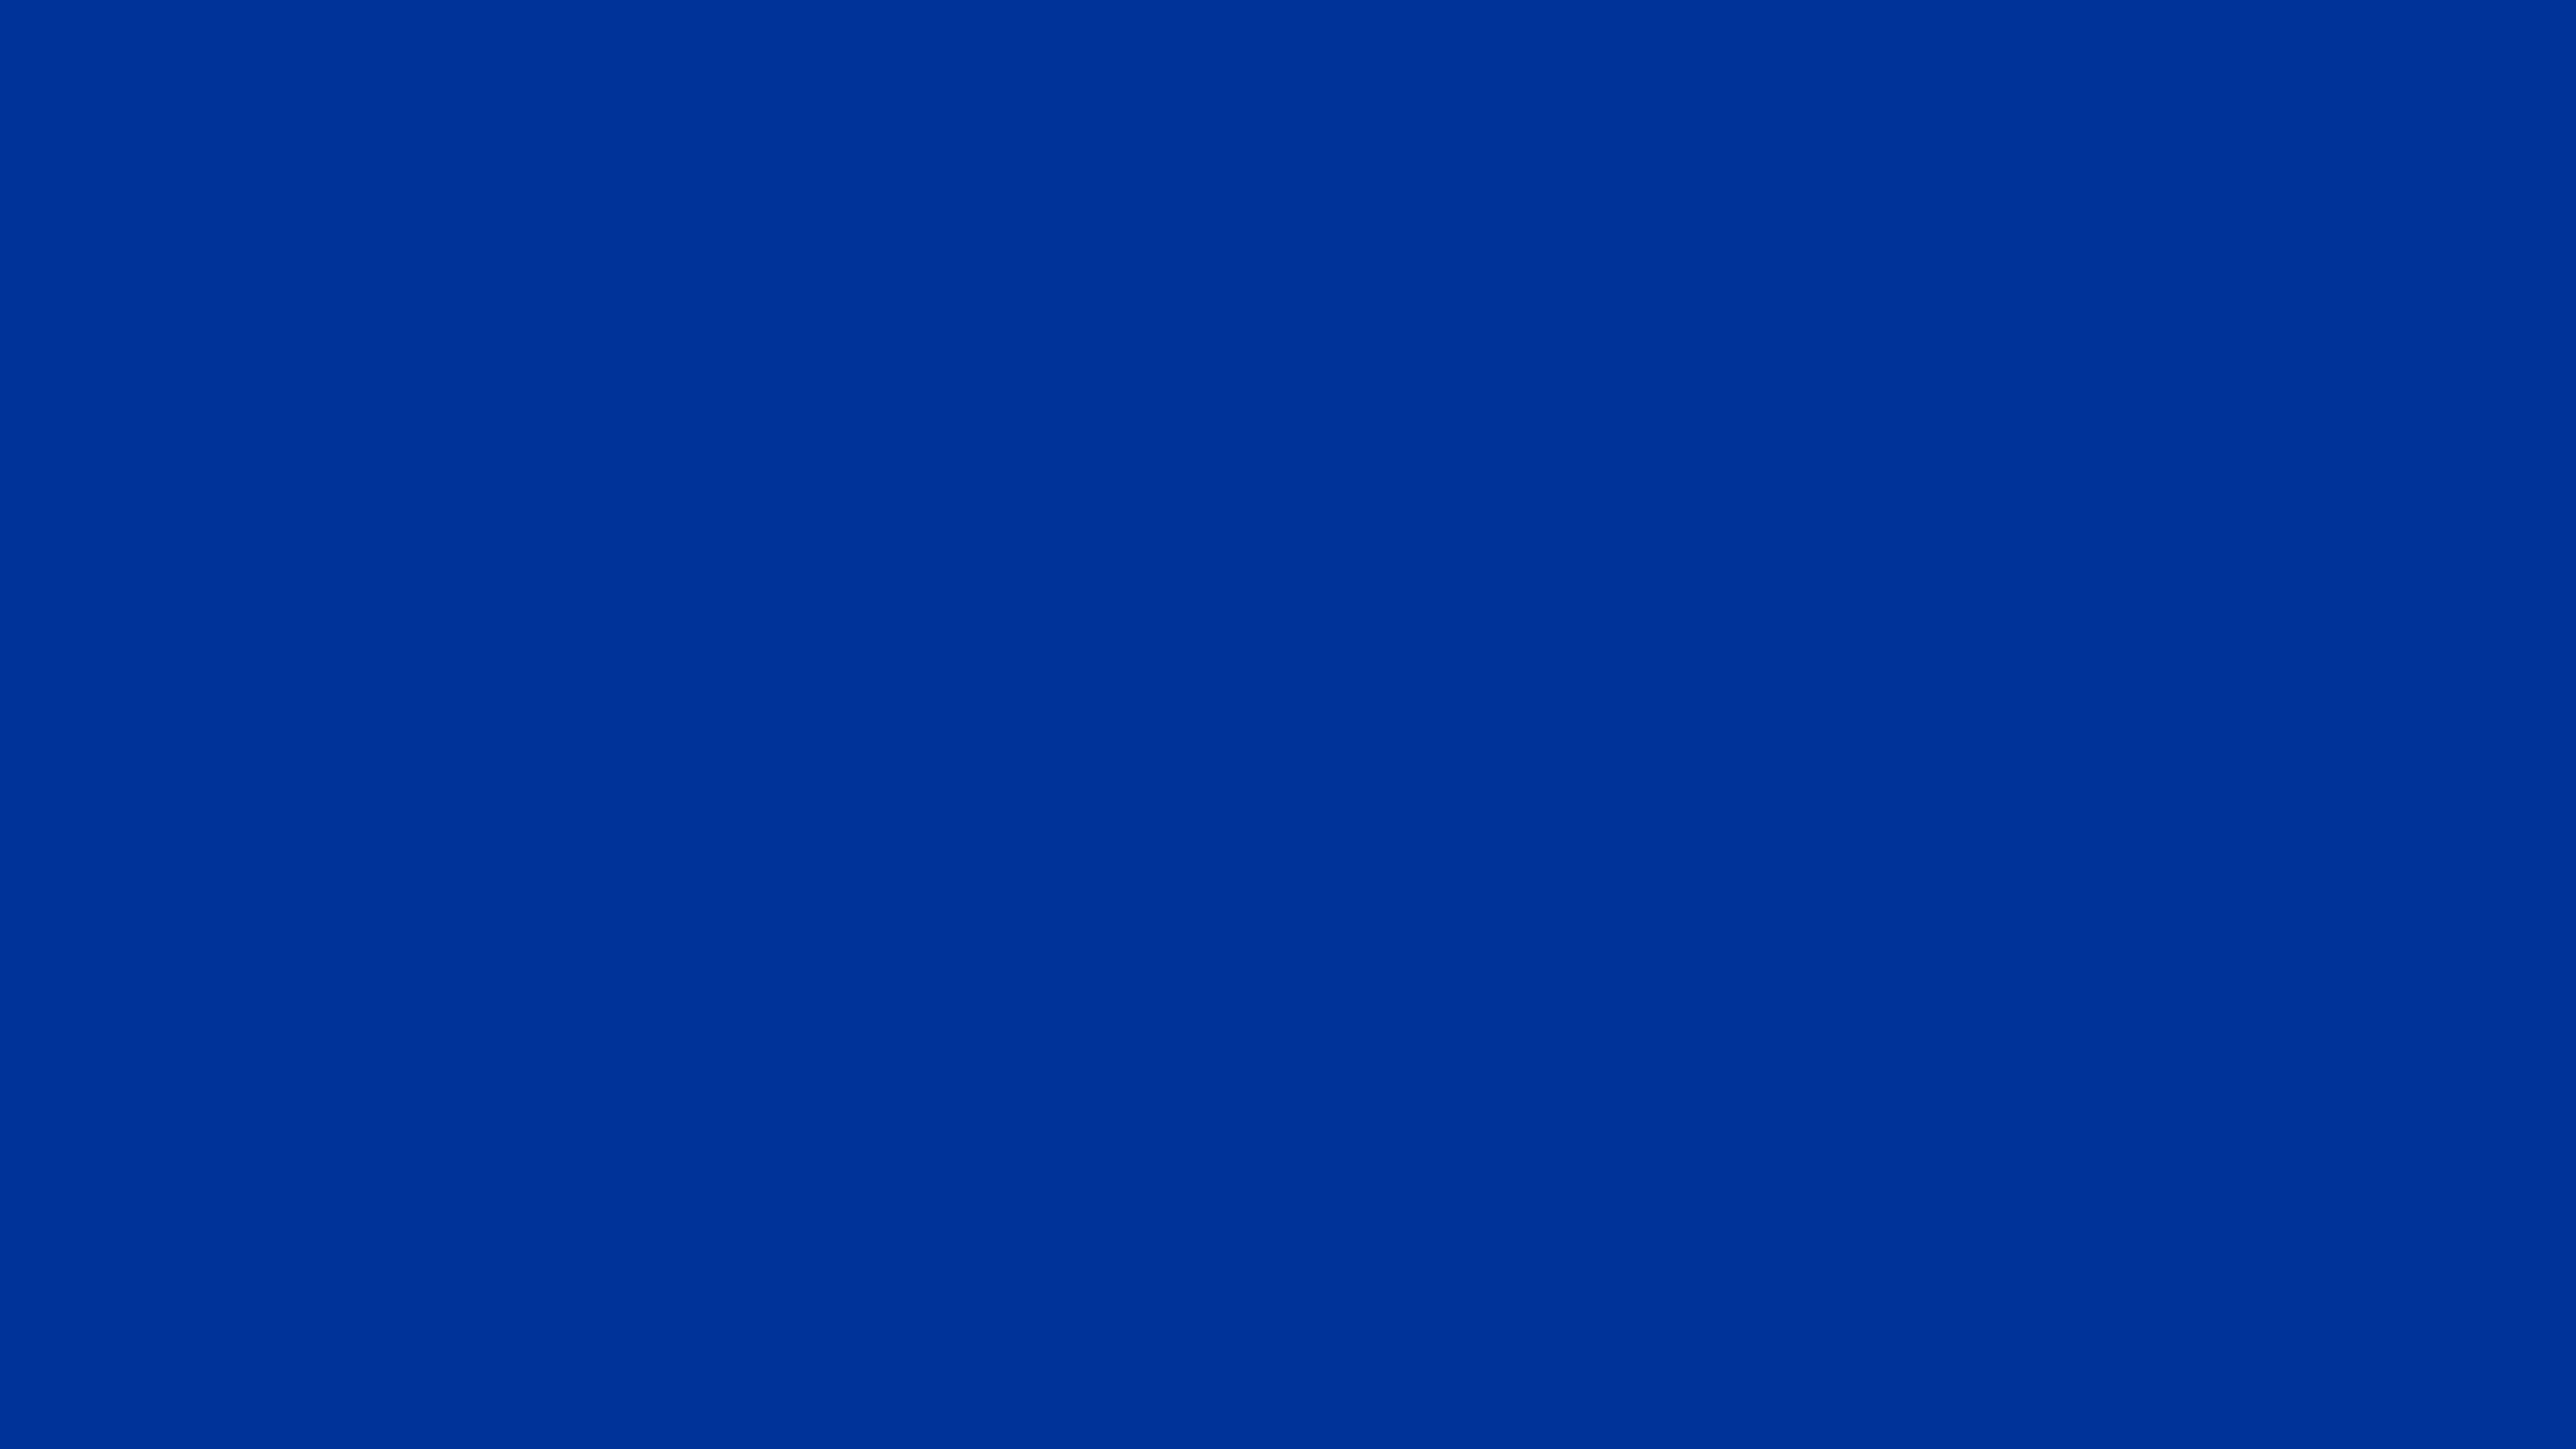 7680x4320 Dark Powder Blue Solid Color Background